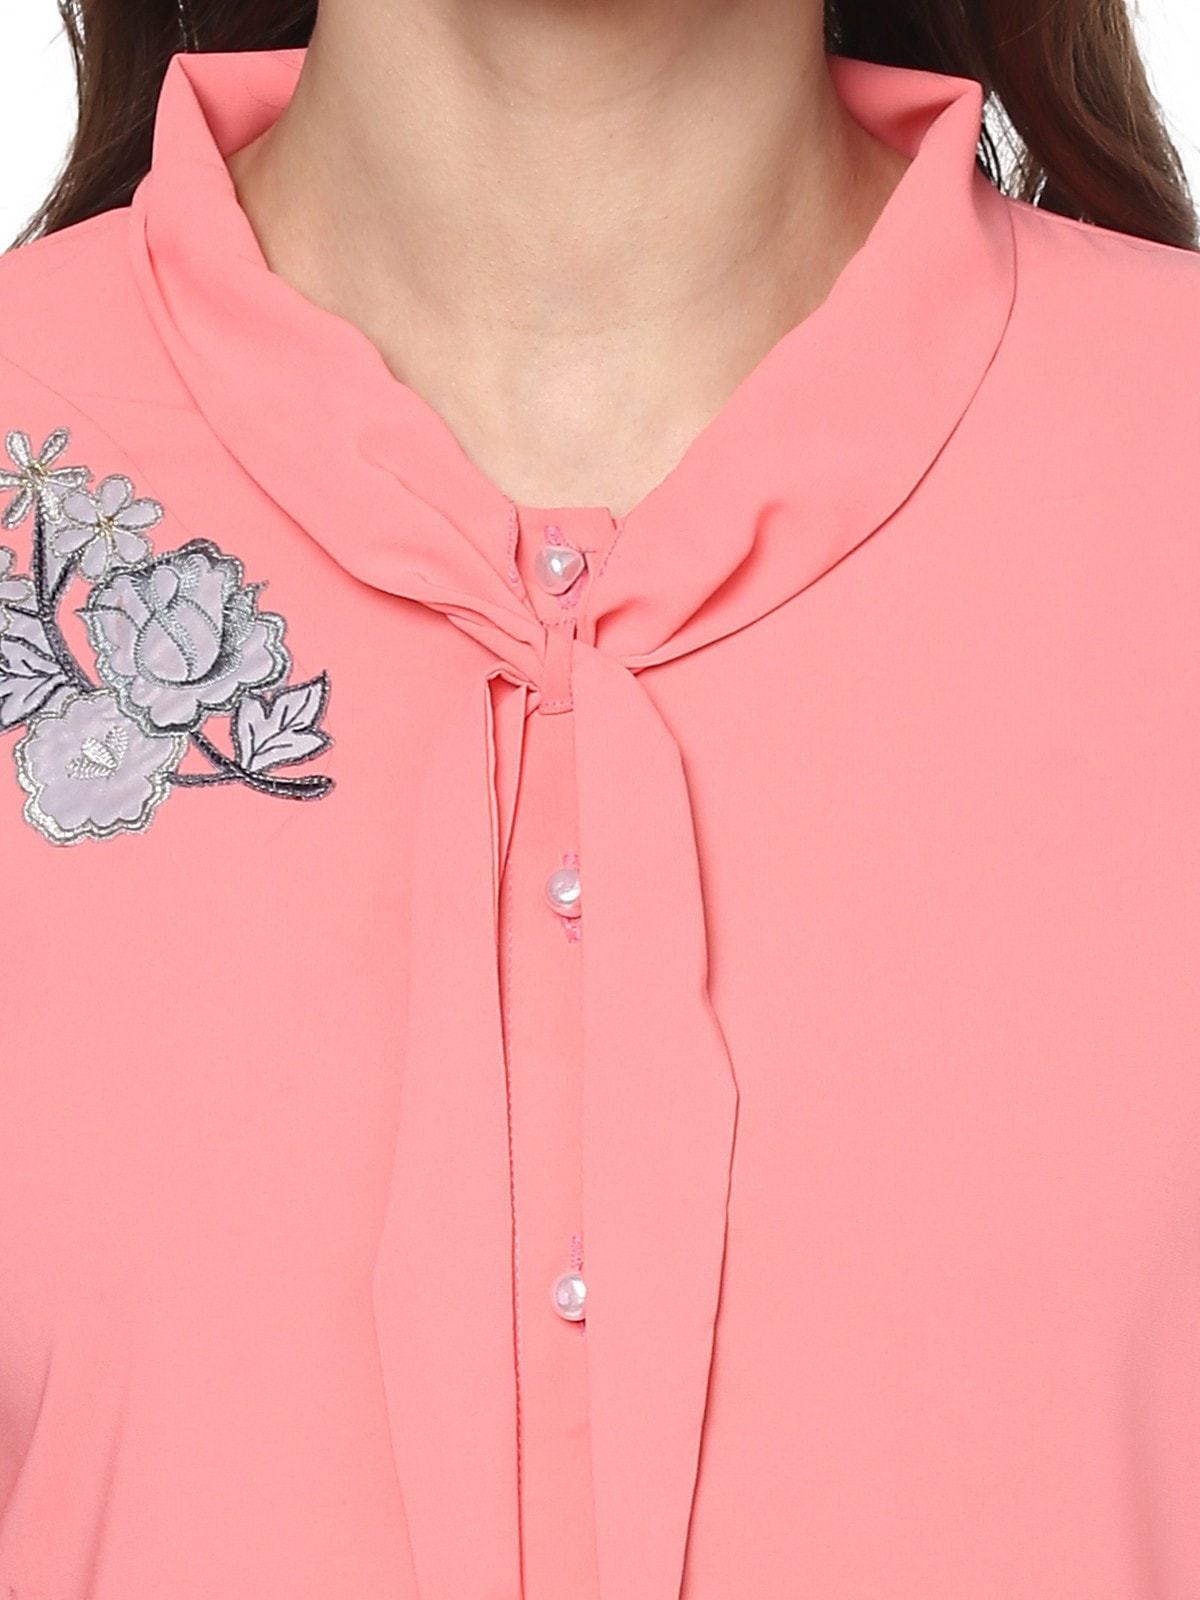 Women's Floral Collar Top - Pannkh